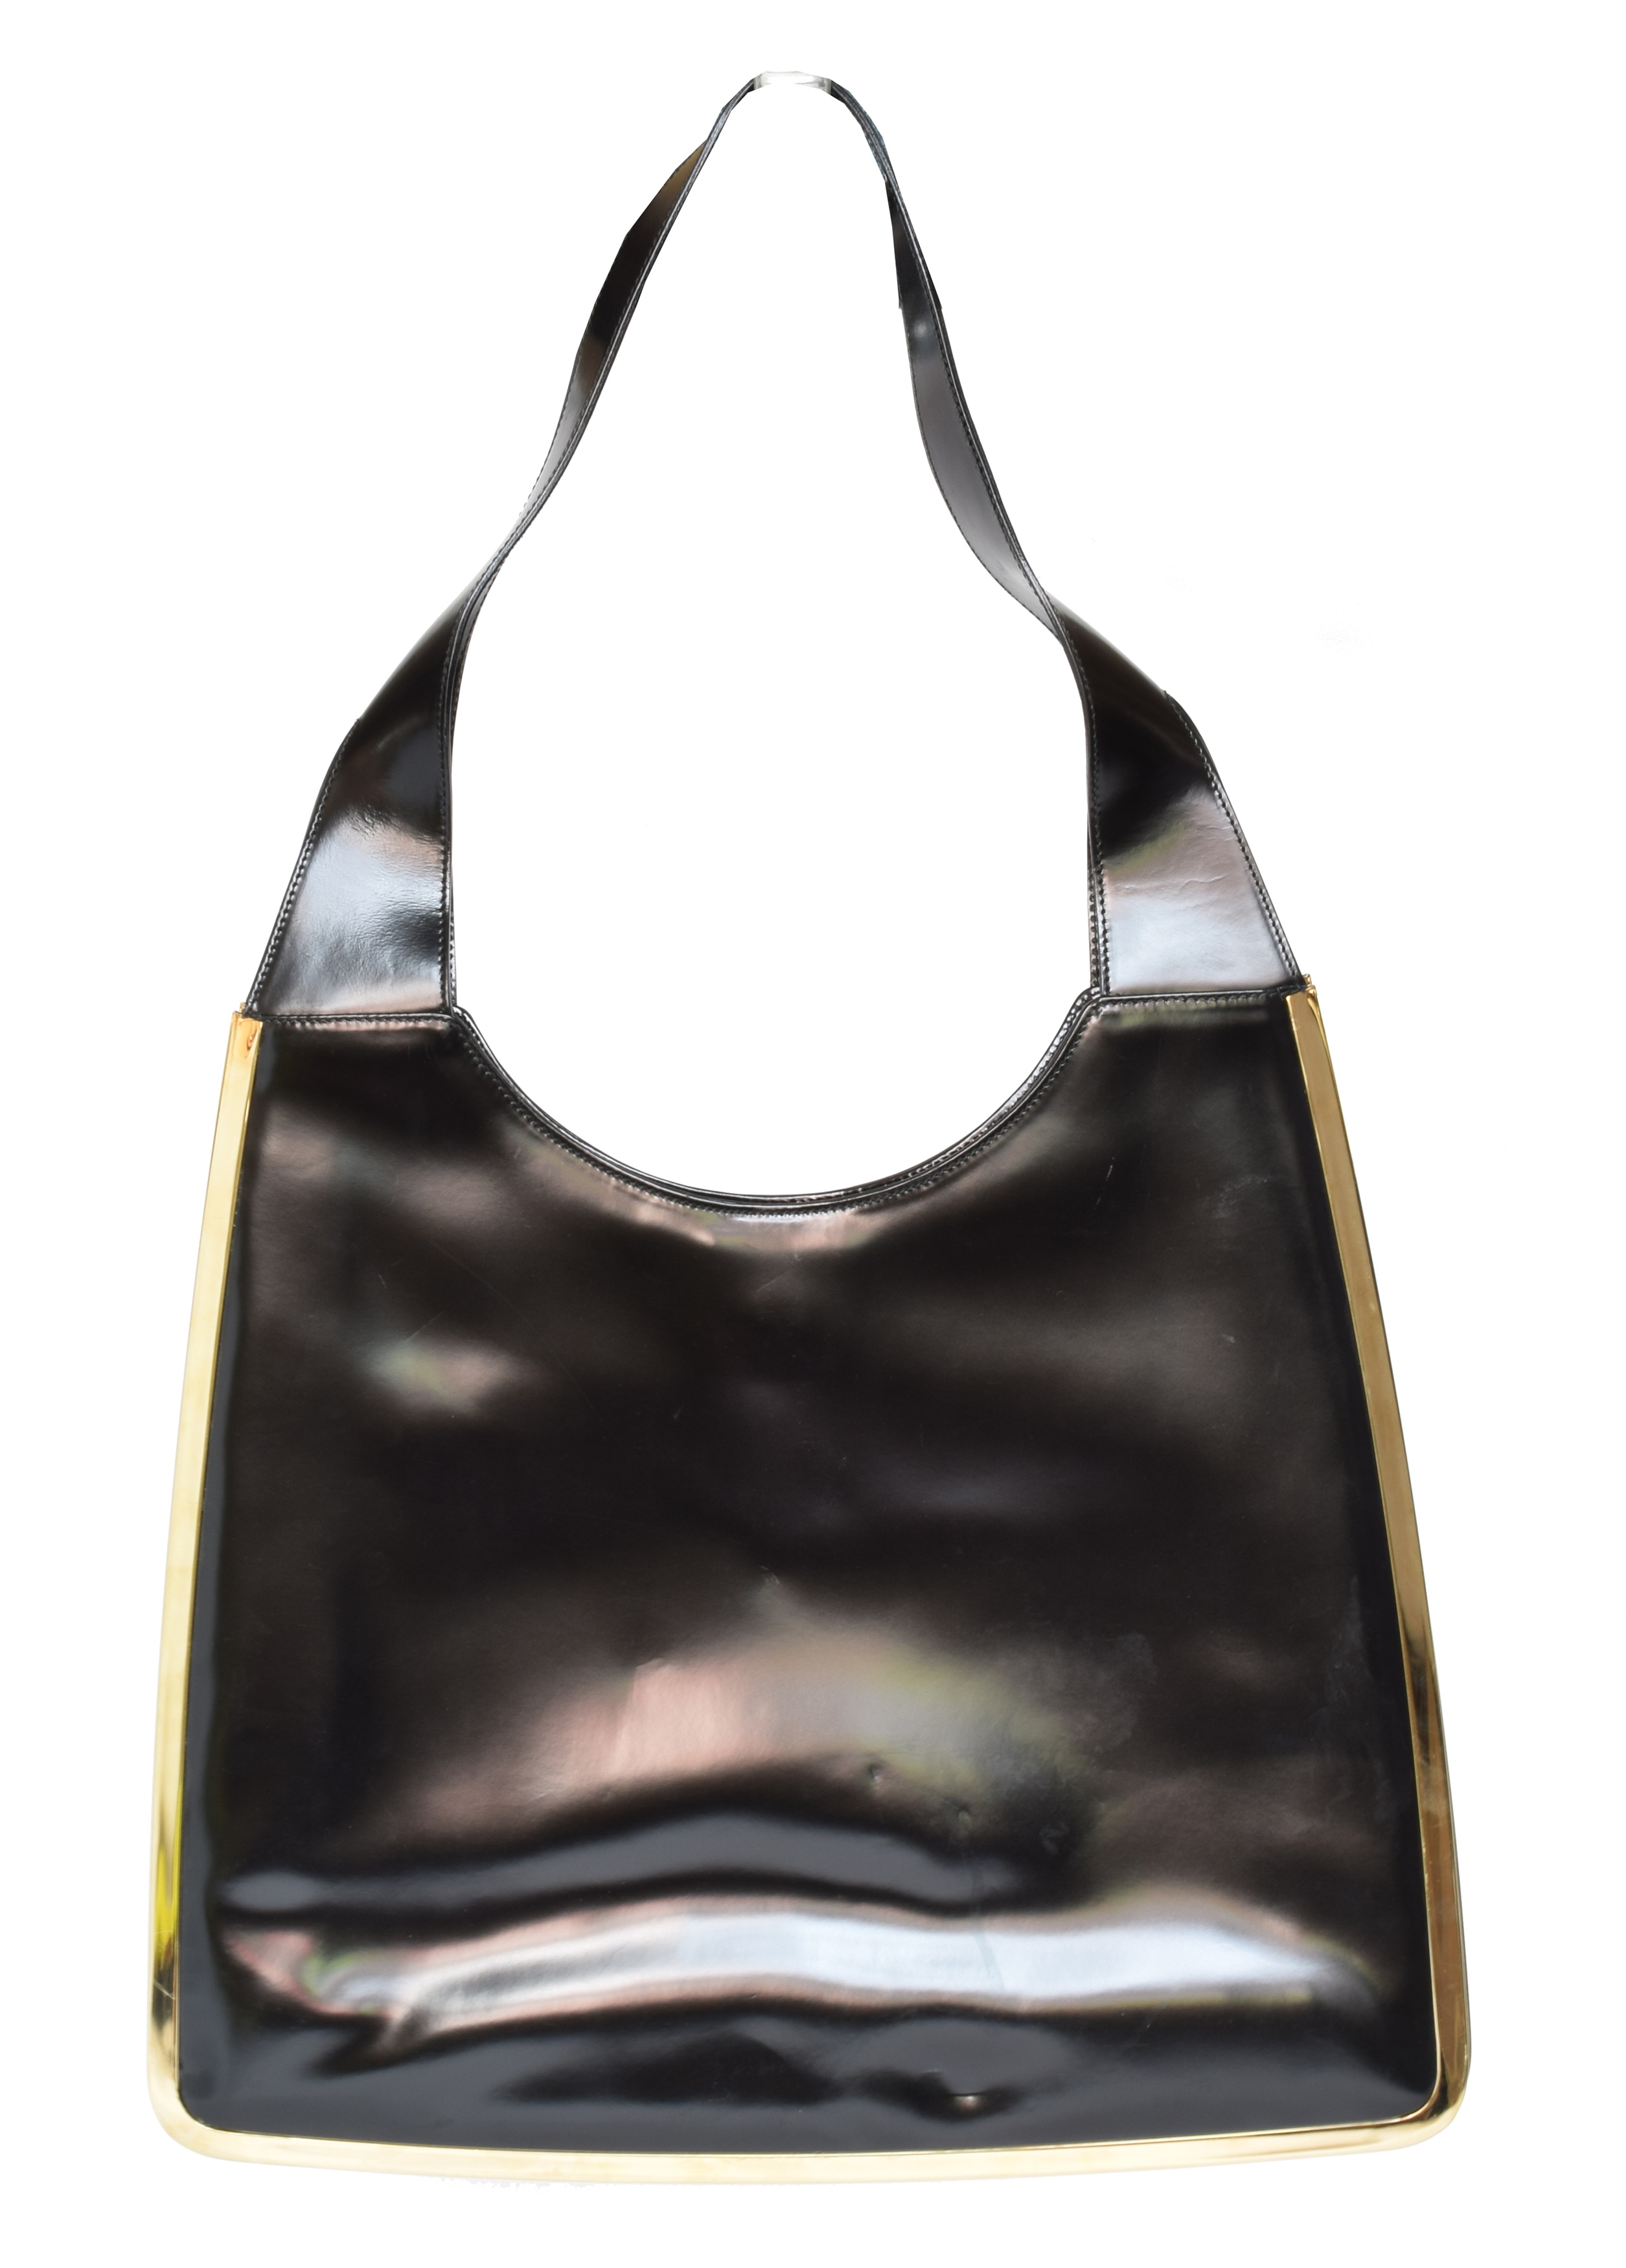 A Gucci shoulder bag, - Image 2 of 2